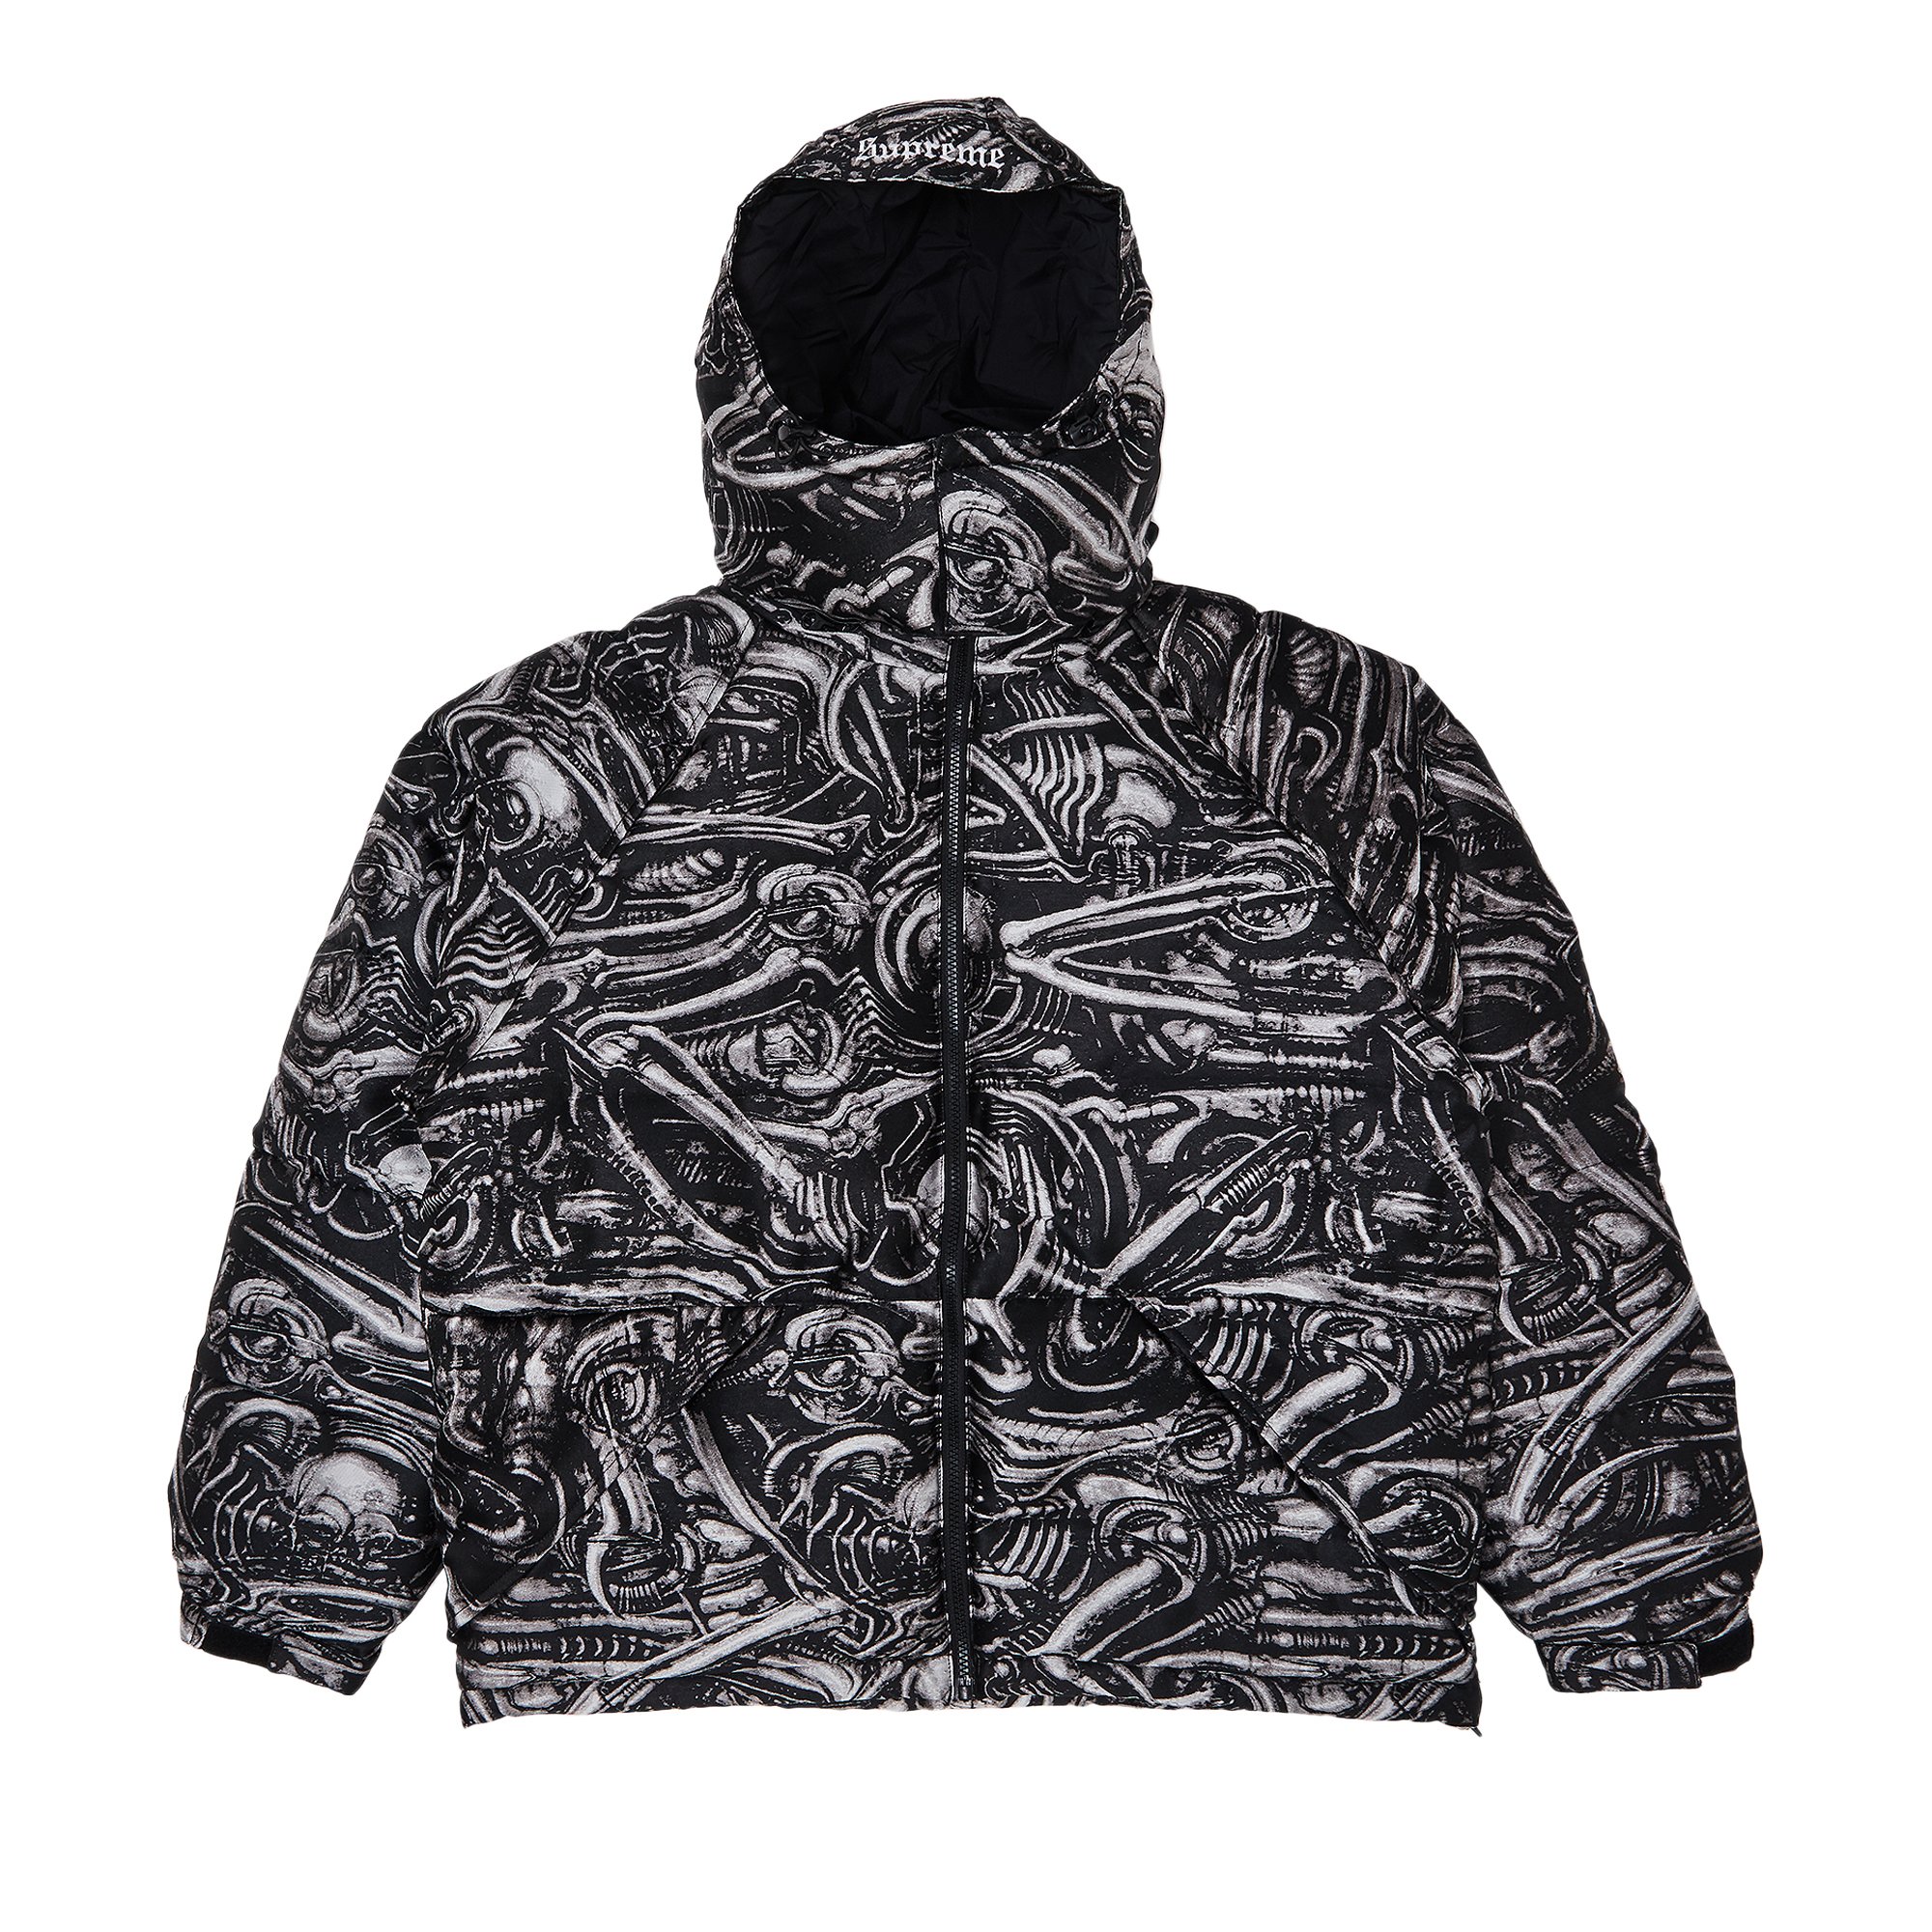 Buy Supreme H.R. Giger Jacquard Down Puffer Jacket 'Black